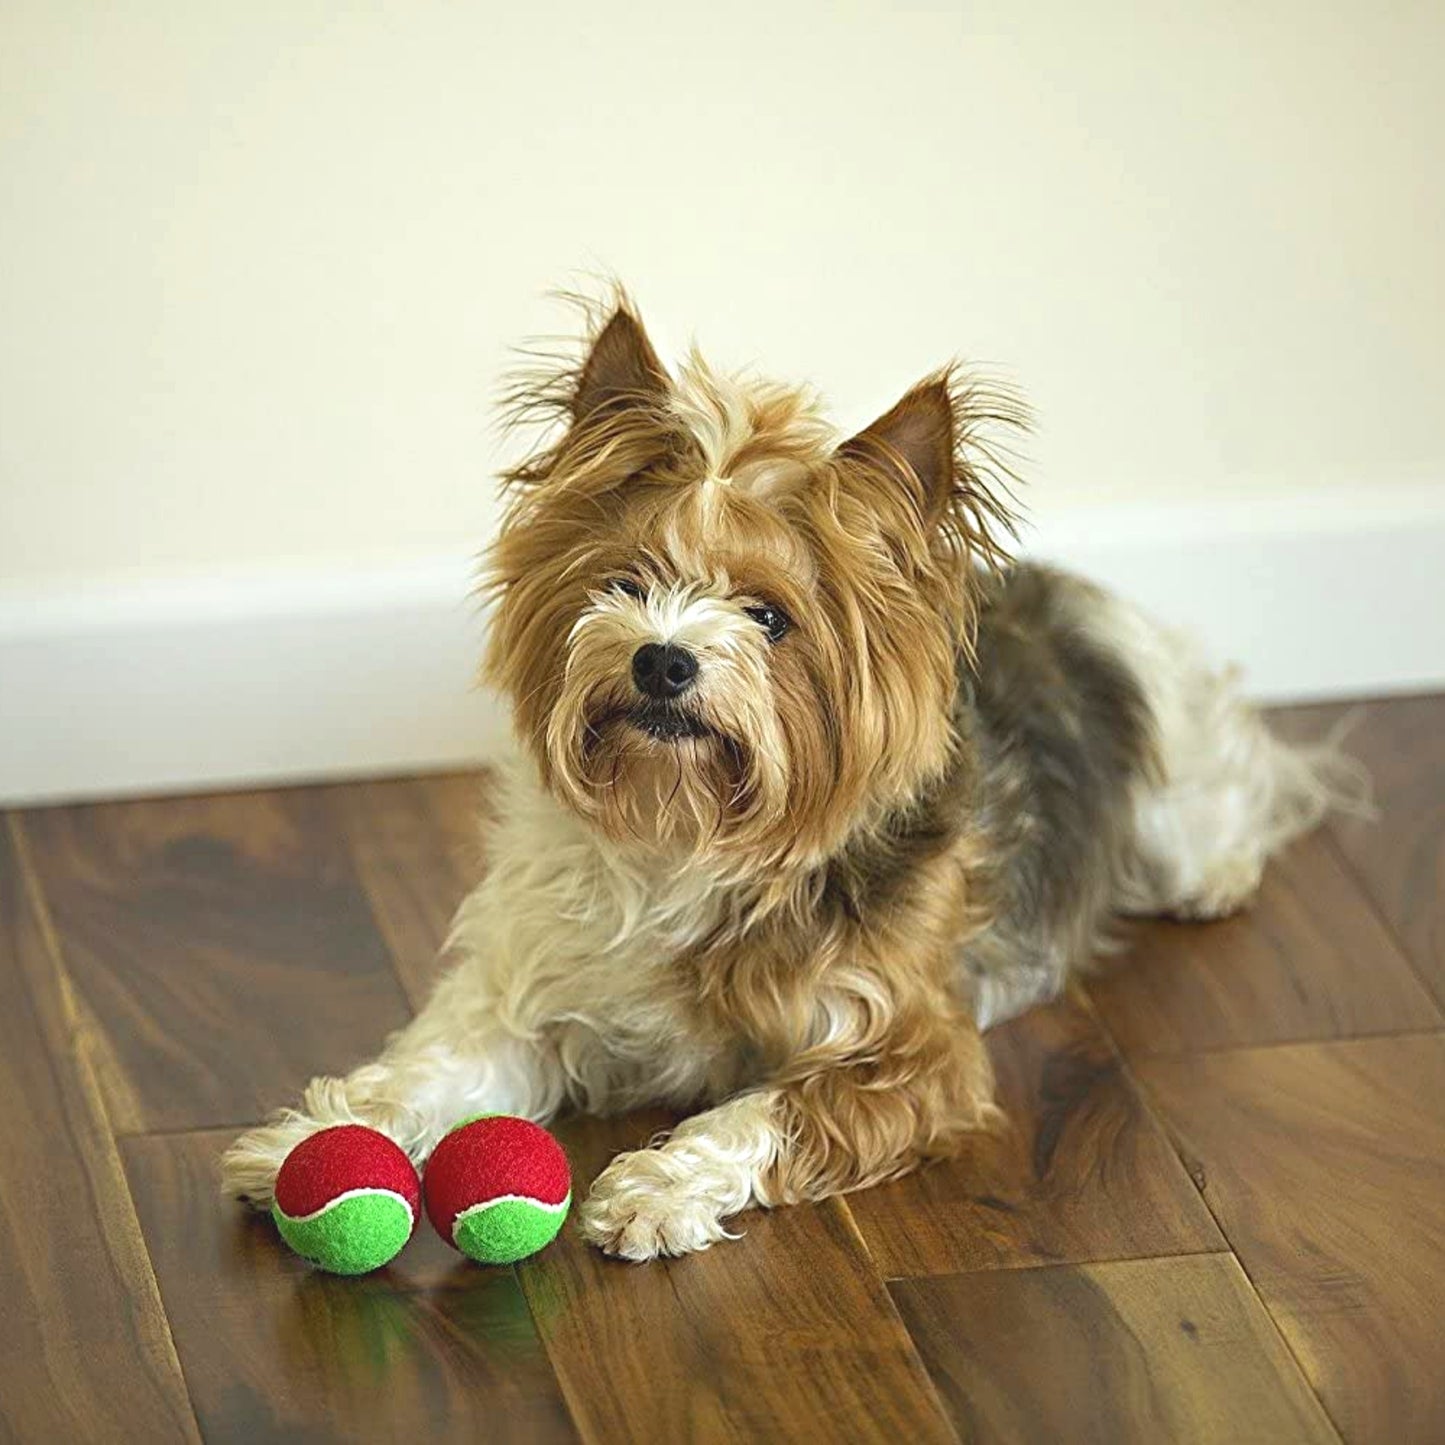 Midlee Candy Cane Filled 1.5" Dog Tennis Balls- Set of 6 Balls